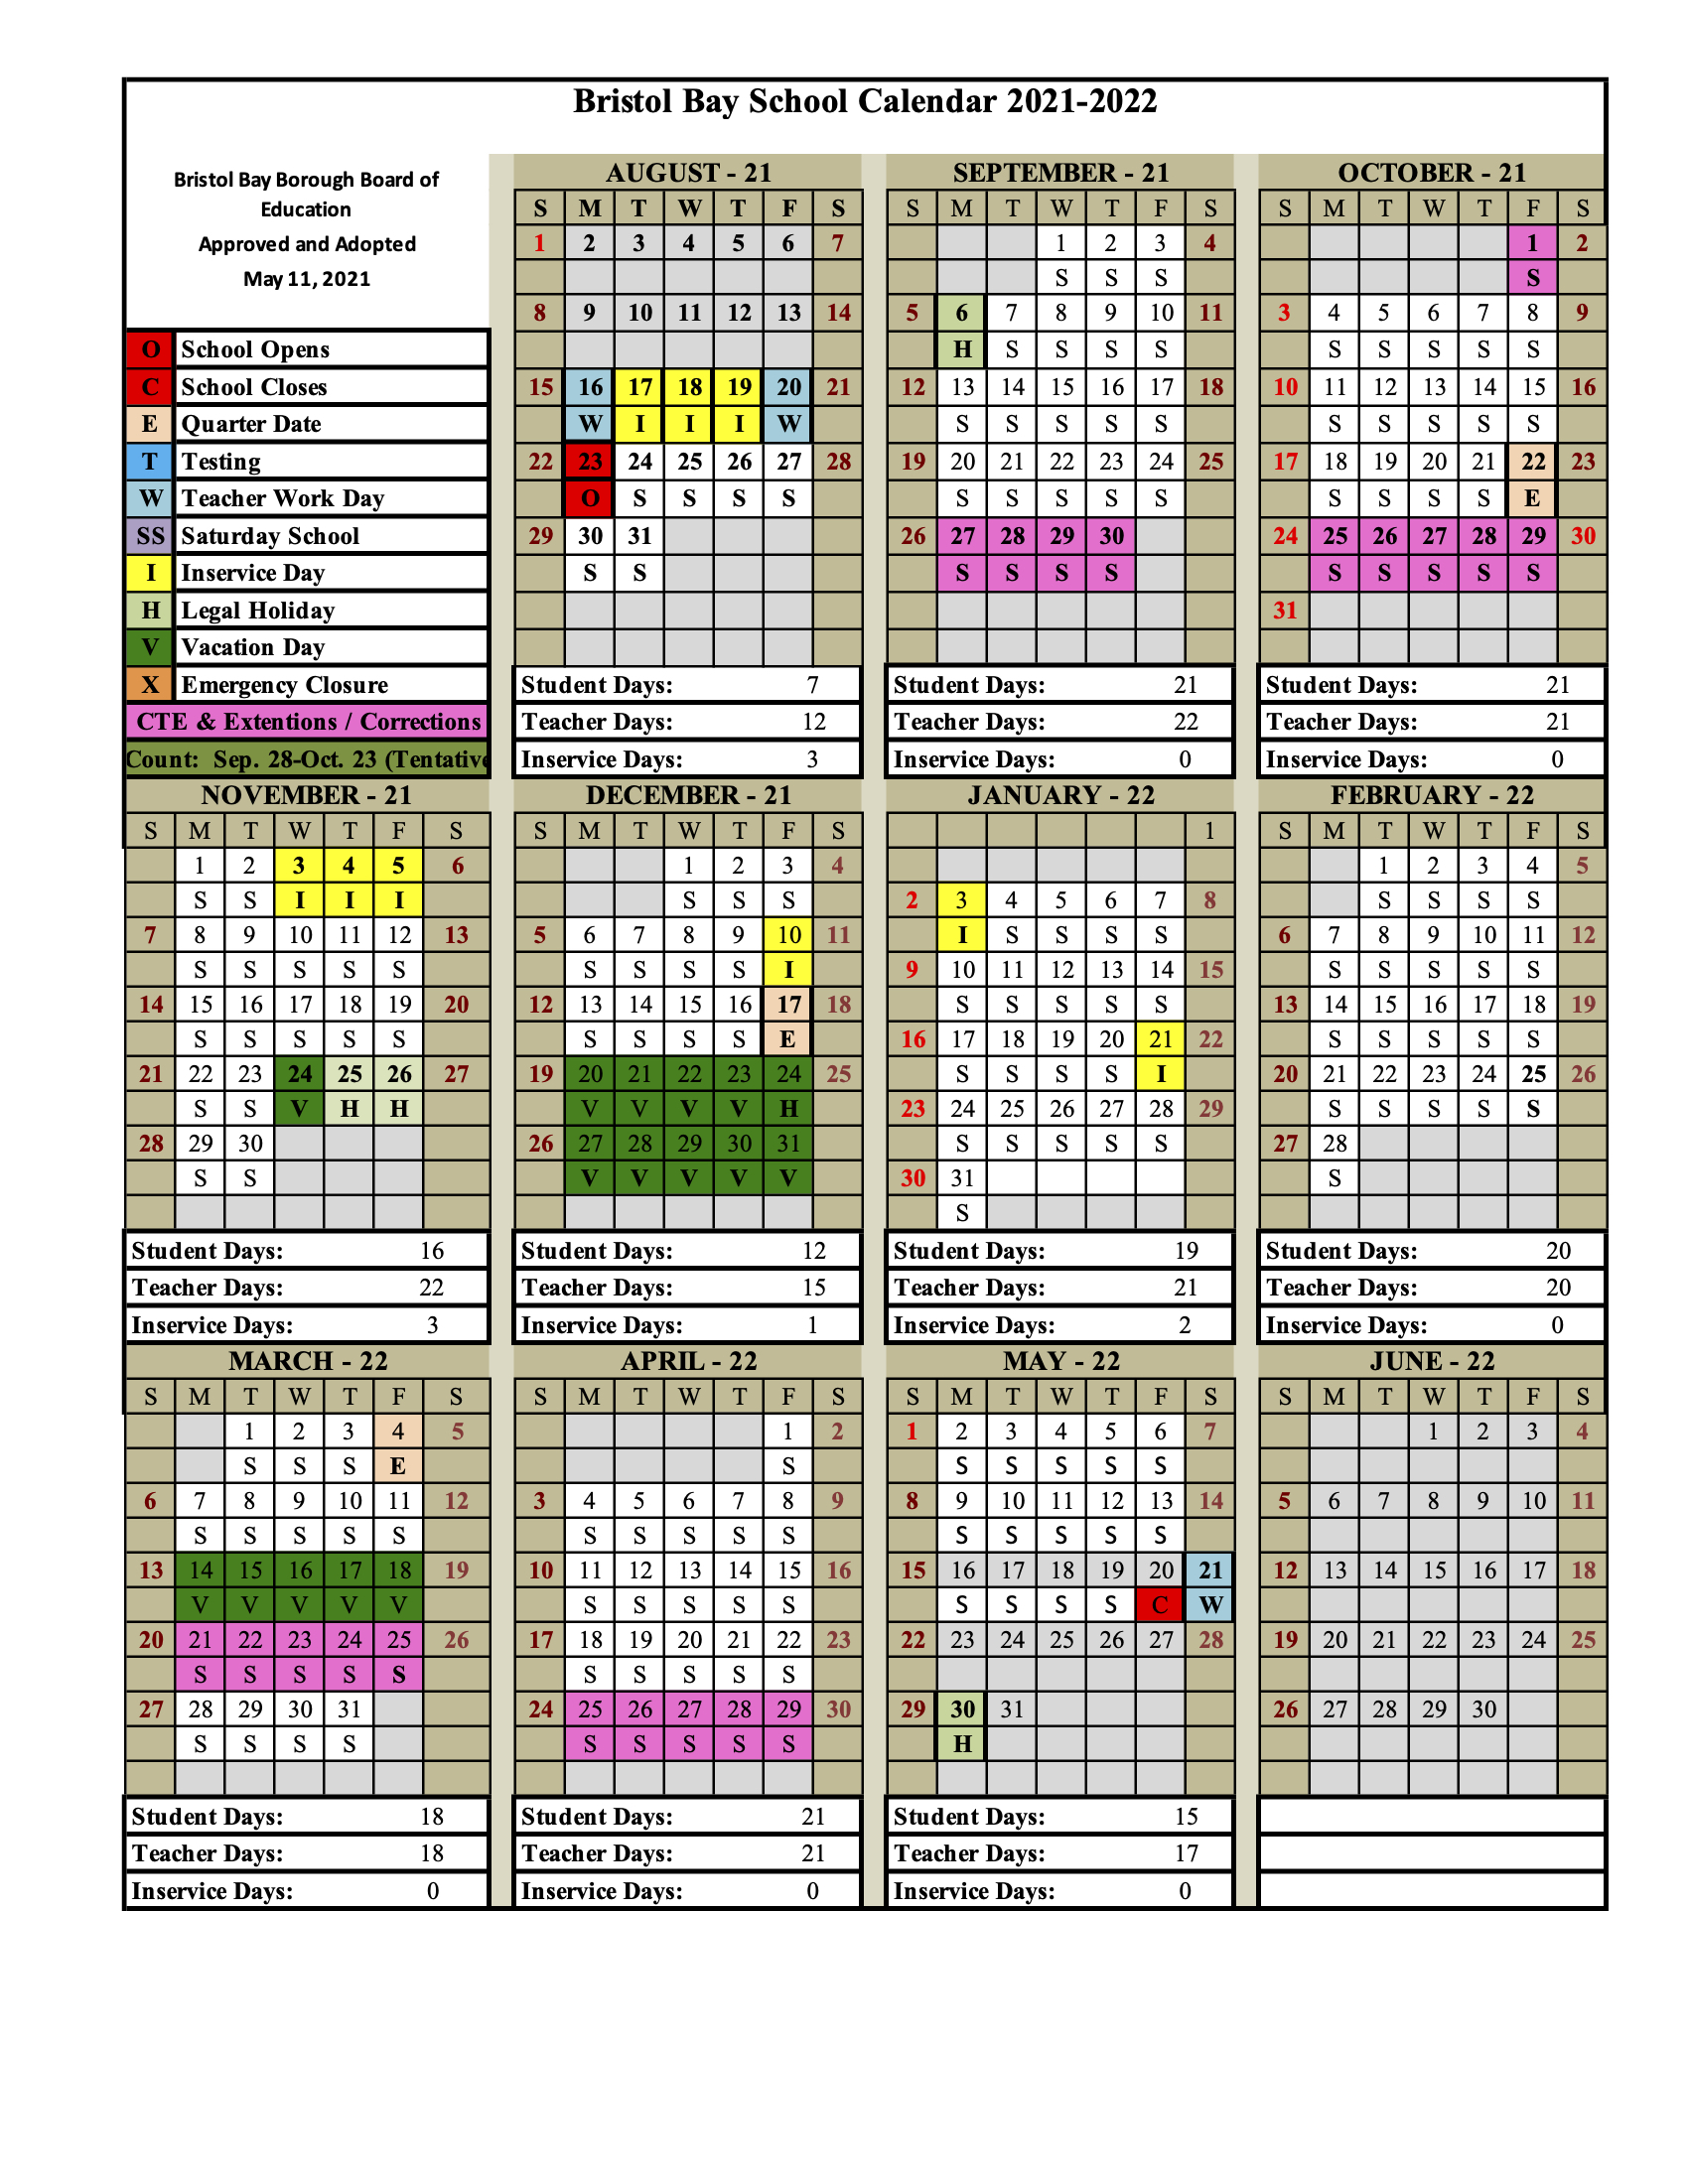 Bristol Bay Borough School District Calendar 2021 and 2022